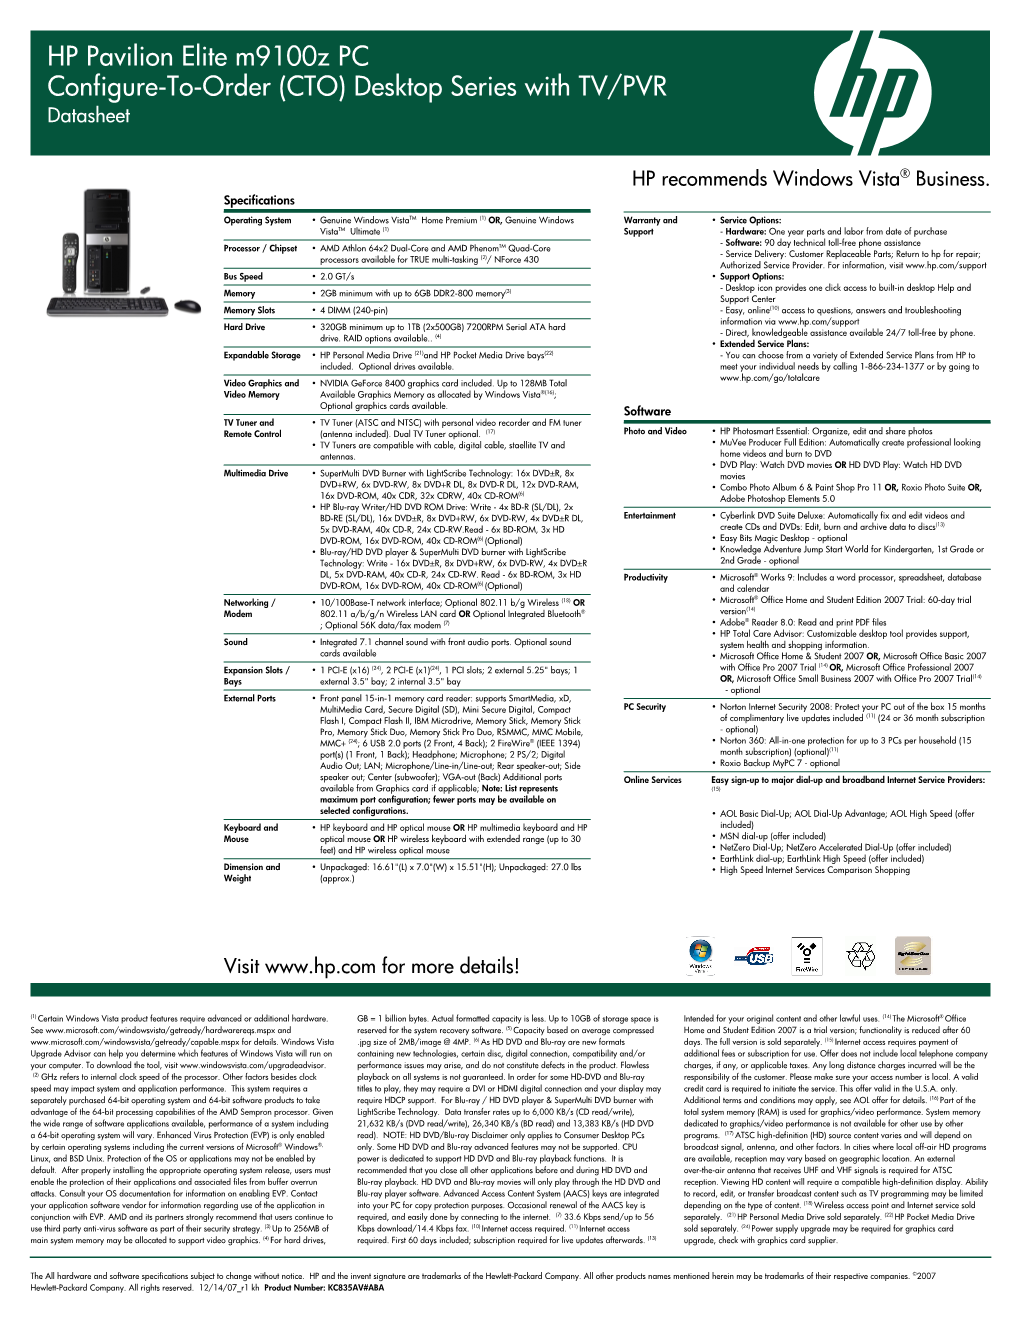 HP Pavilion Elite M9100z PC Configure-To-Order (CTO) Desktop Series with TV/PVR Datasheet